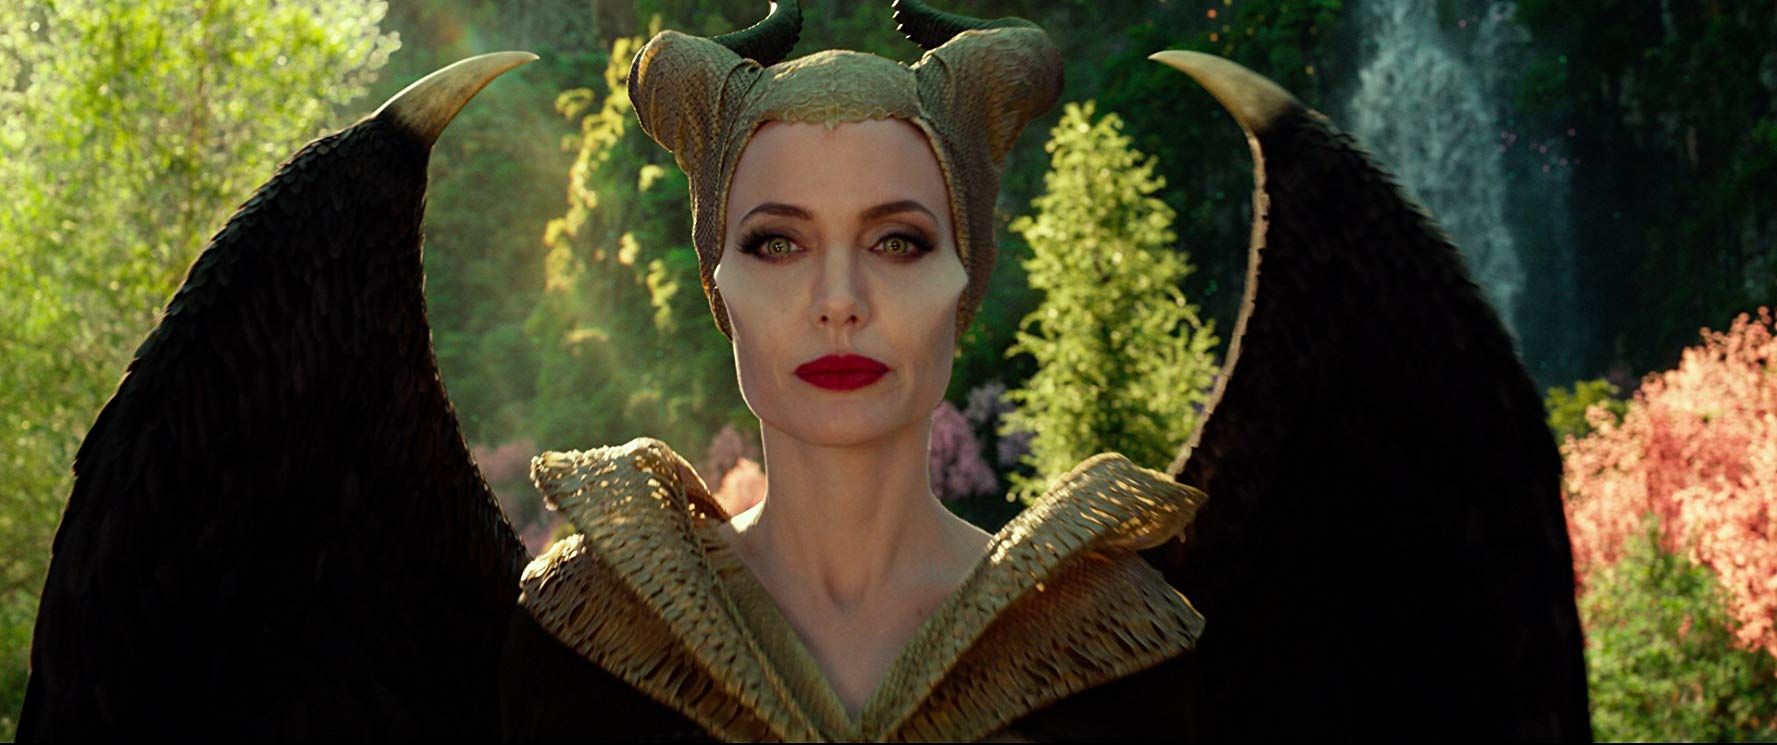 Maleficent Sequel: Title, Cast, Premiere Date, Trailer, Costume